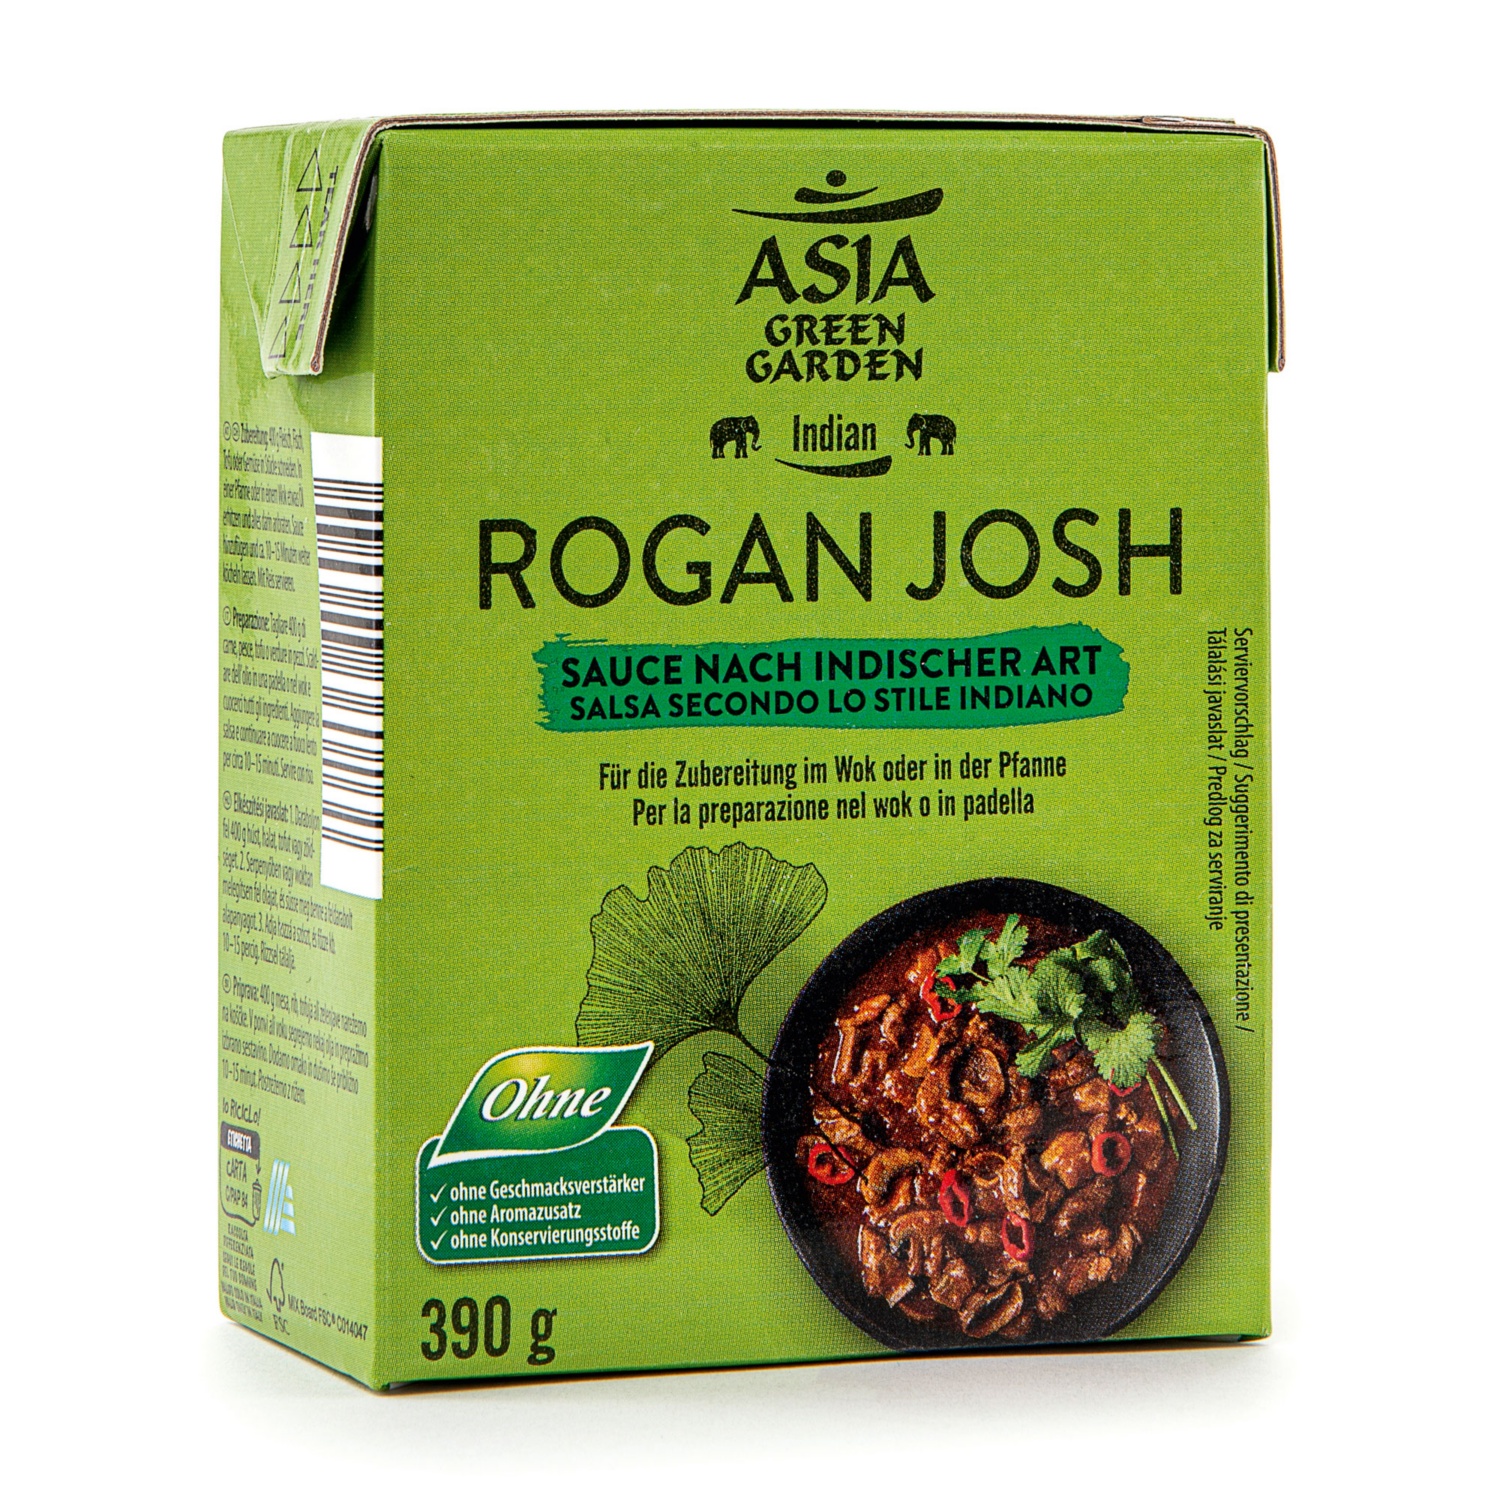 ASIA GREEN GARDEN Indiai szósz, 390 g, Rogan Josh